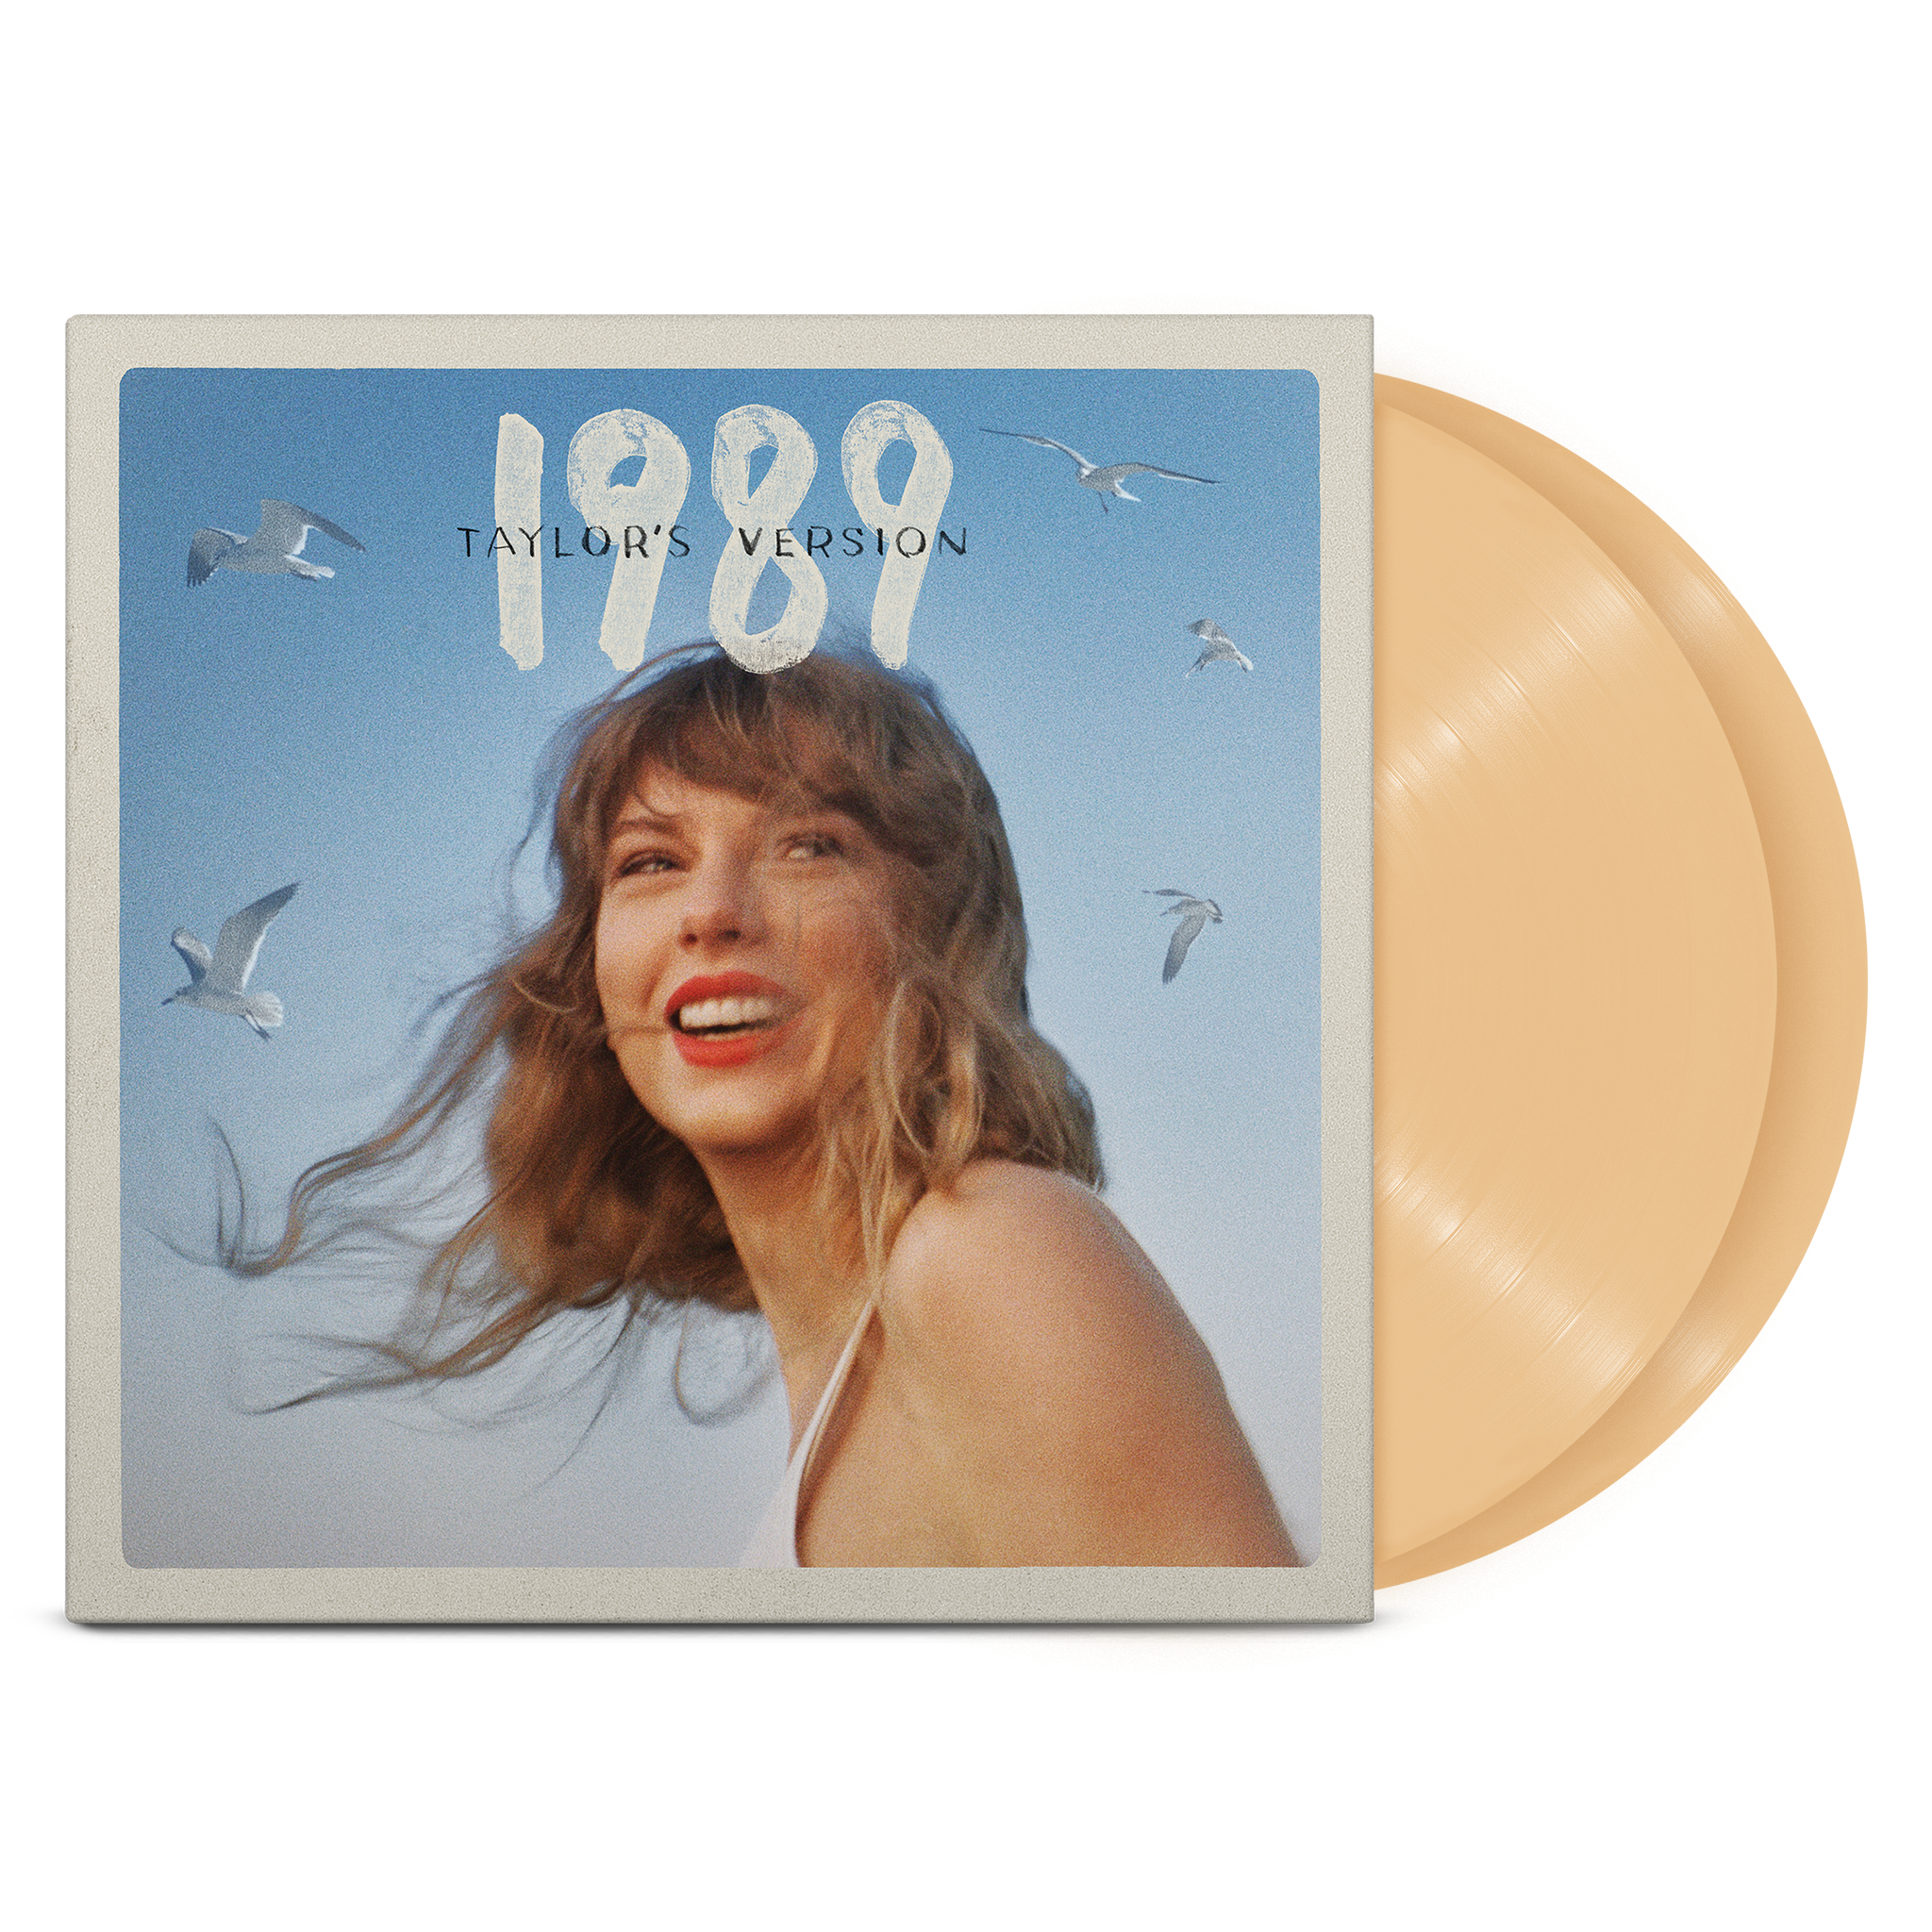 1989 (Taylor's Version) Shop - Taylor Swift UK Store